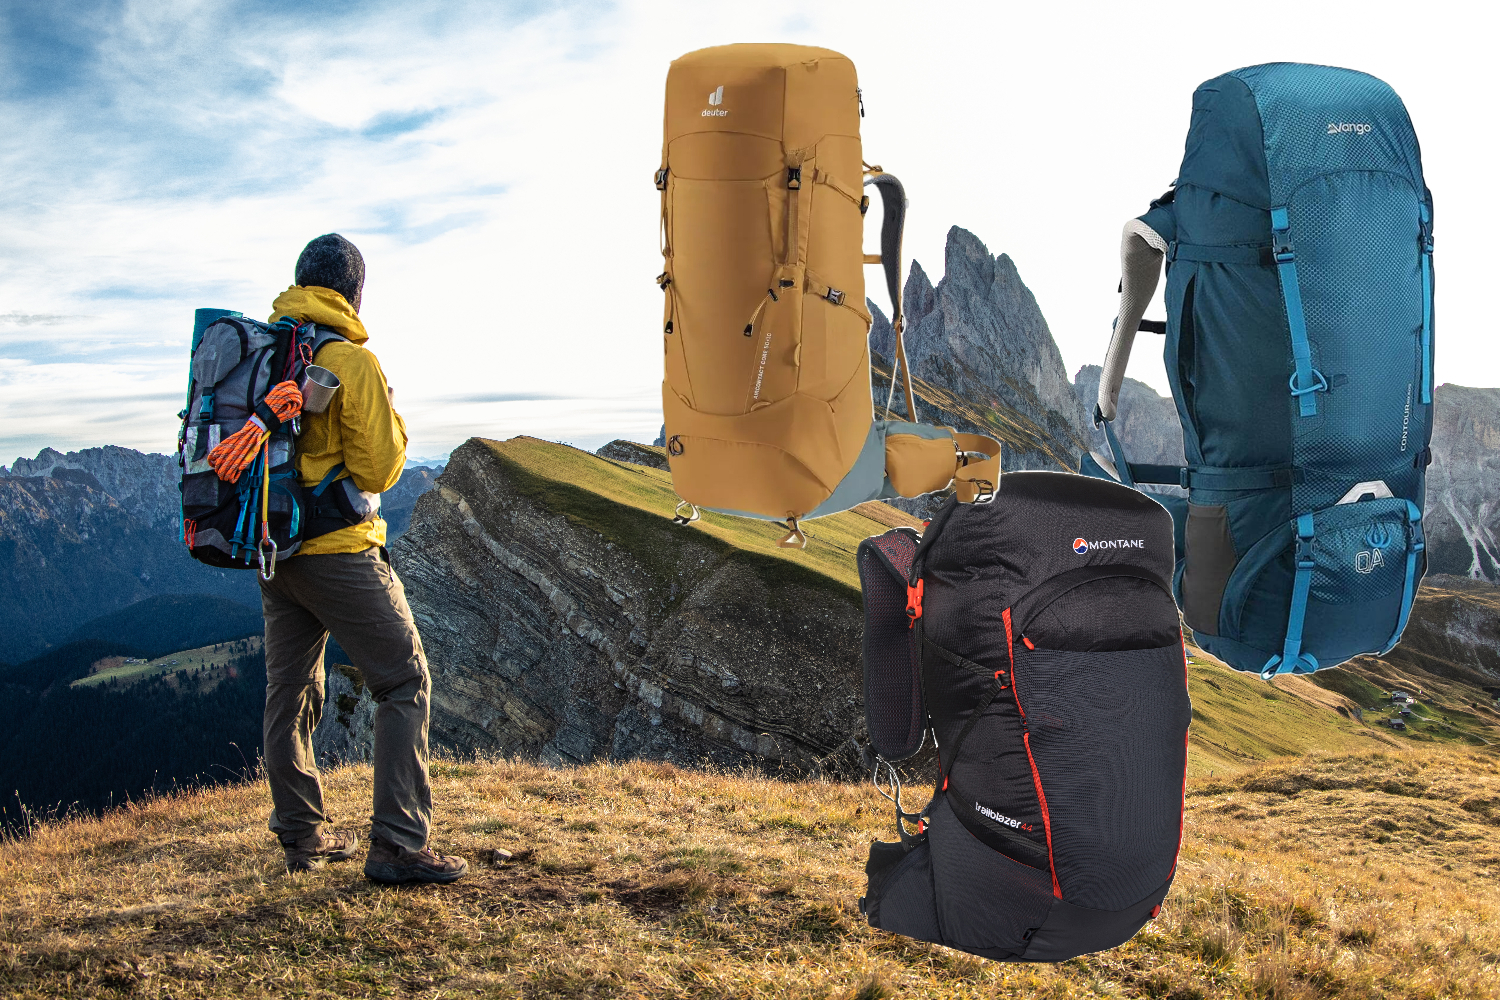 Buy TRAWOC 60 LTR Trekking Rucksack Travel Bag Hiking Backpack, 1 Year  Warranty online | Looksgud.in